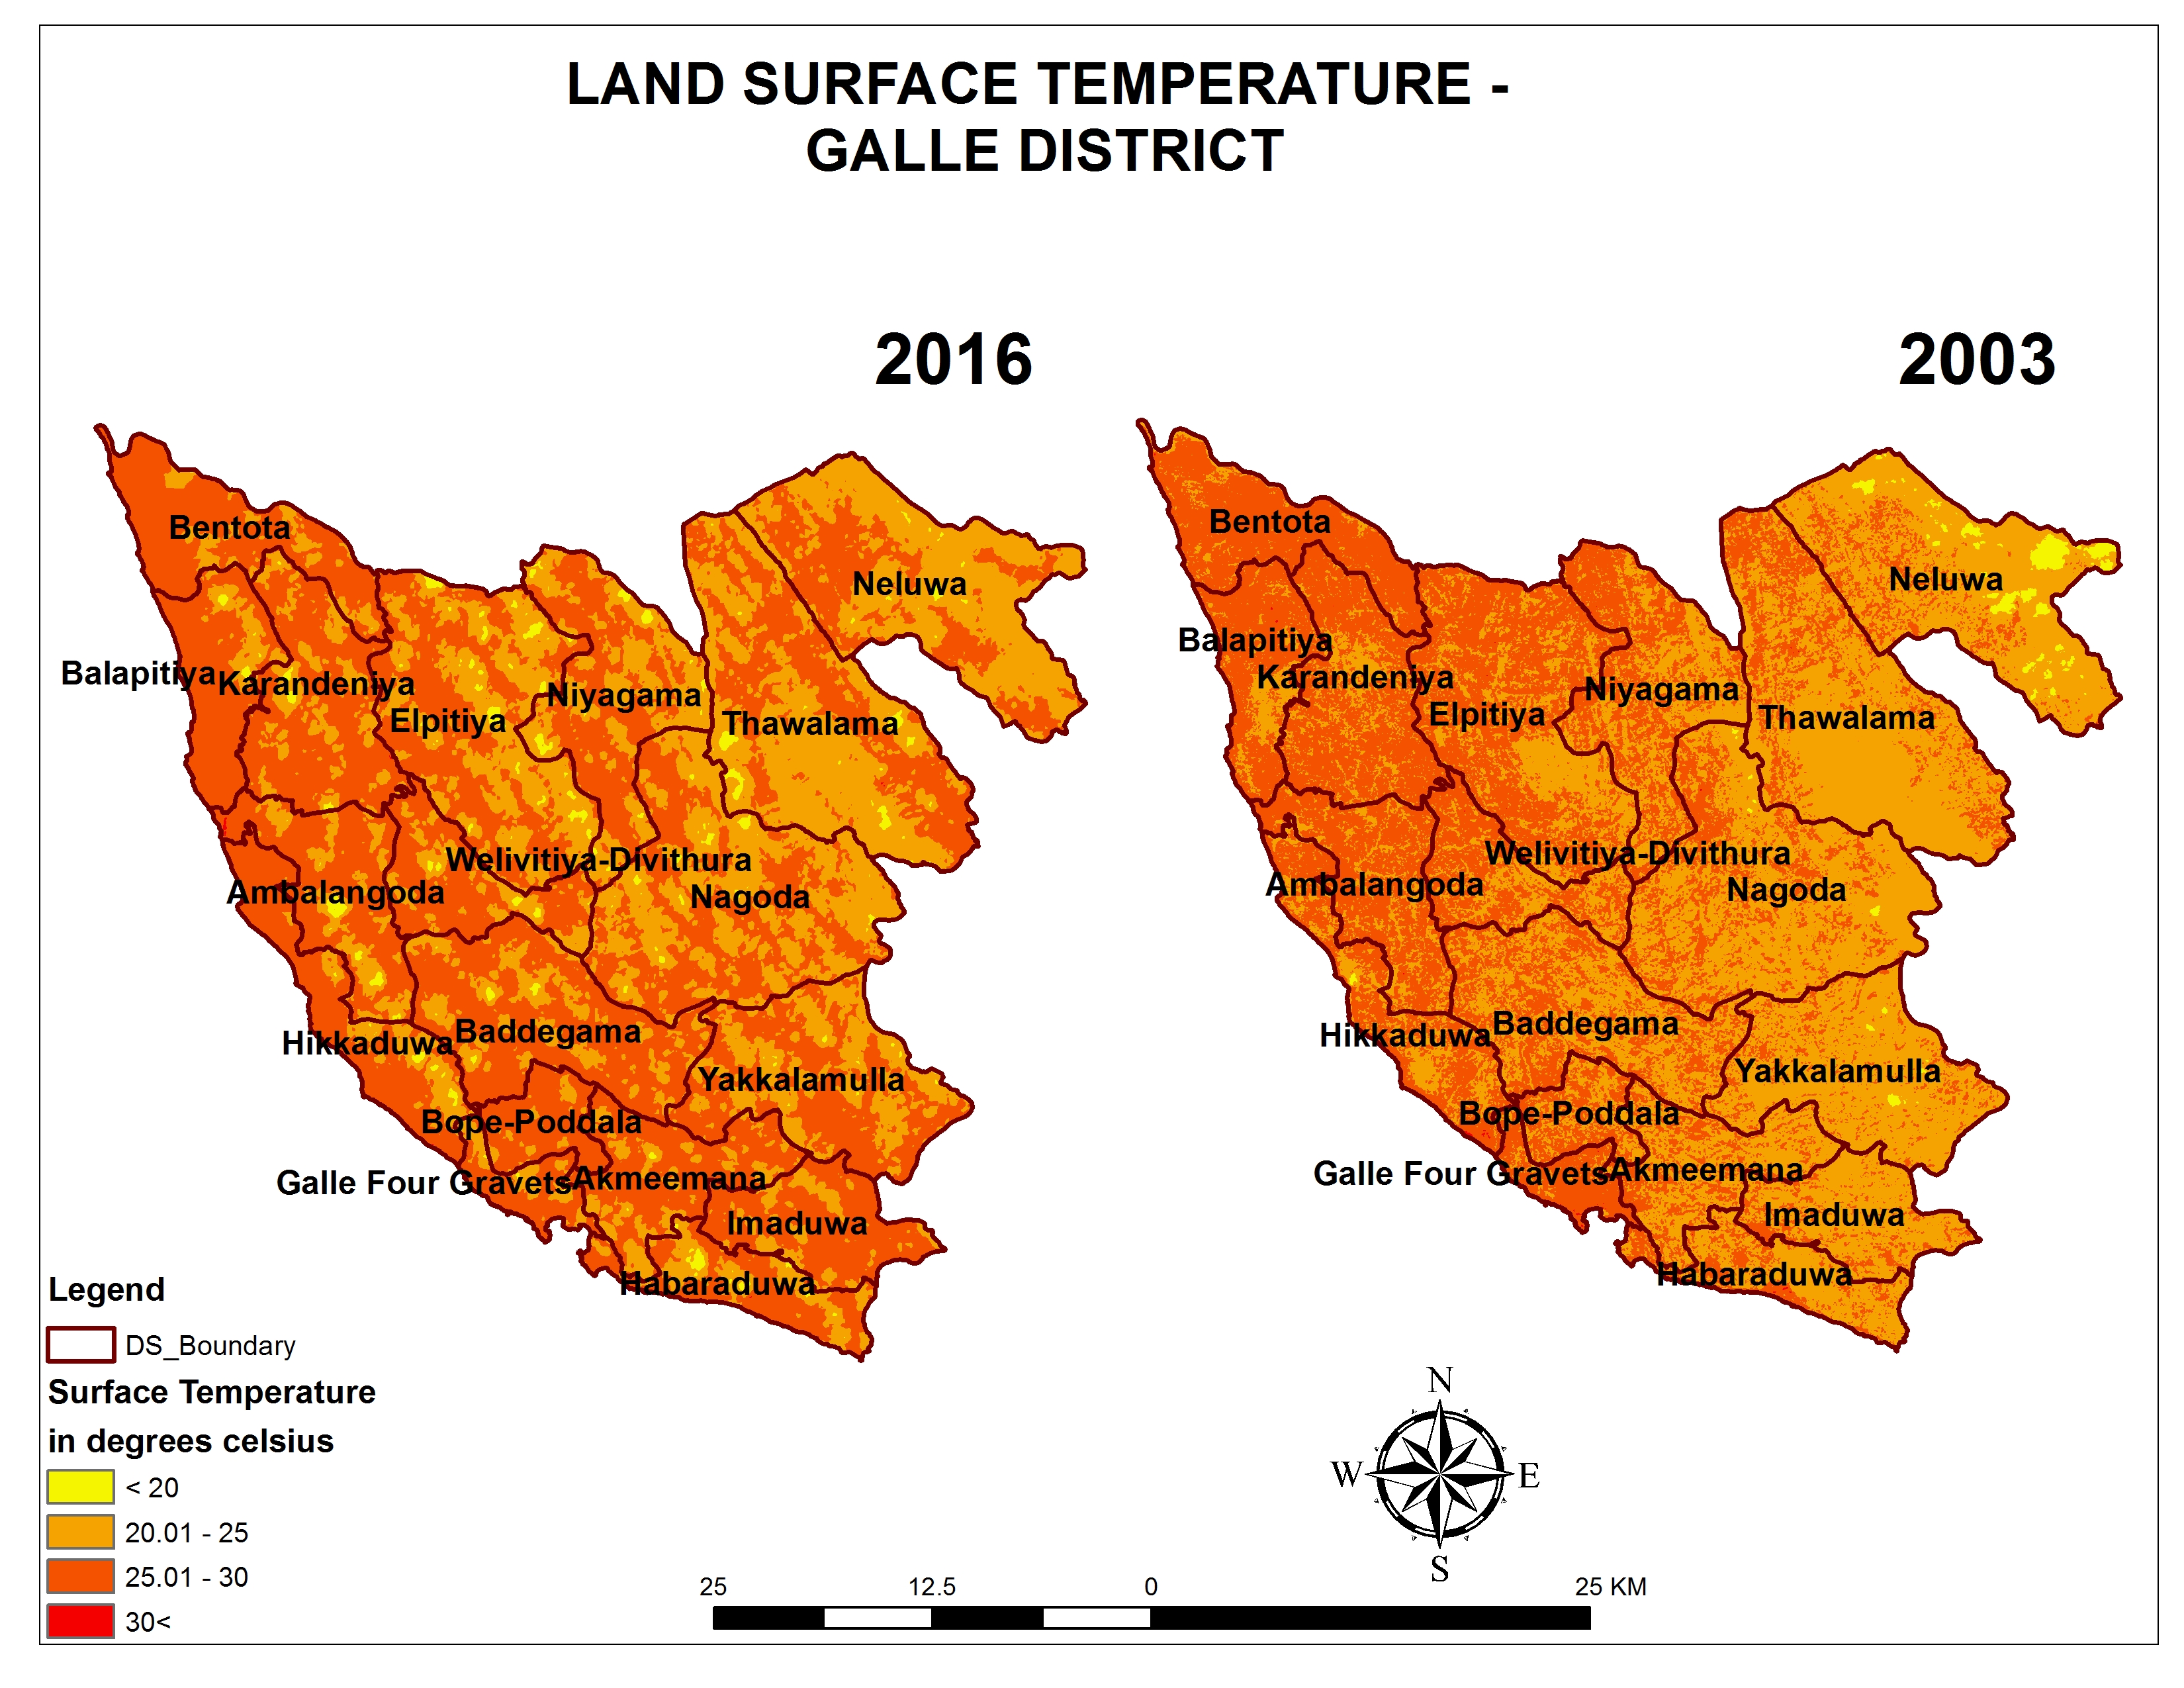 Land Surface Temperature